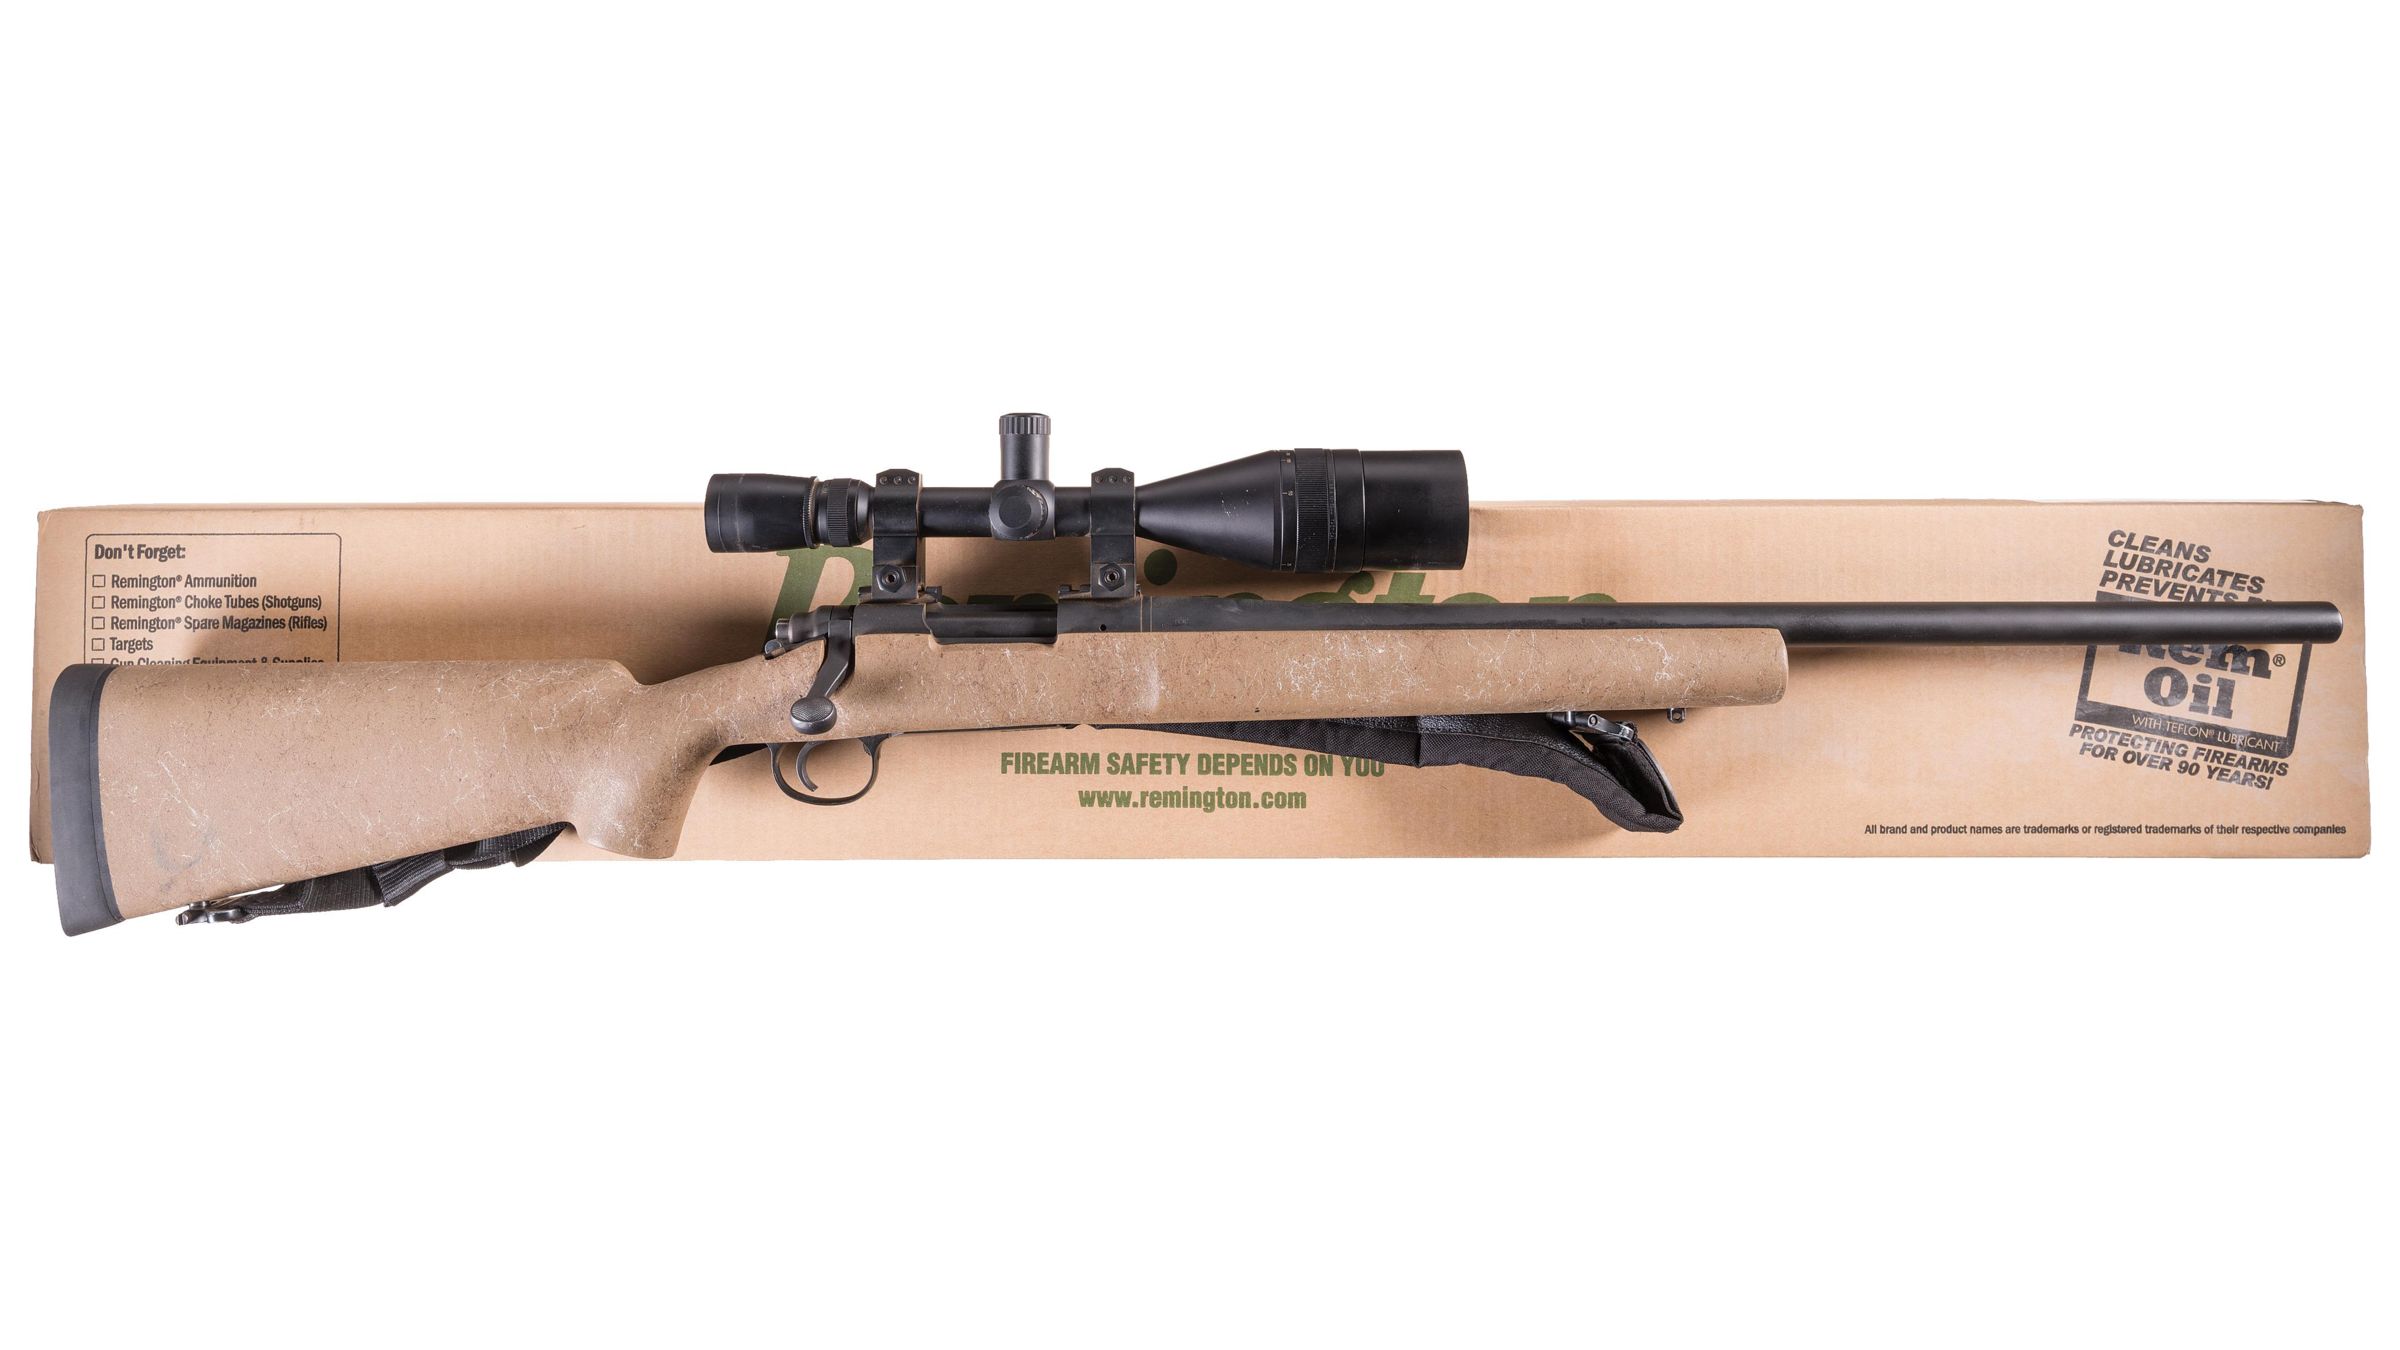 m40 sniper rifle stock